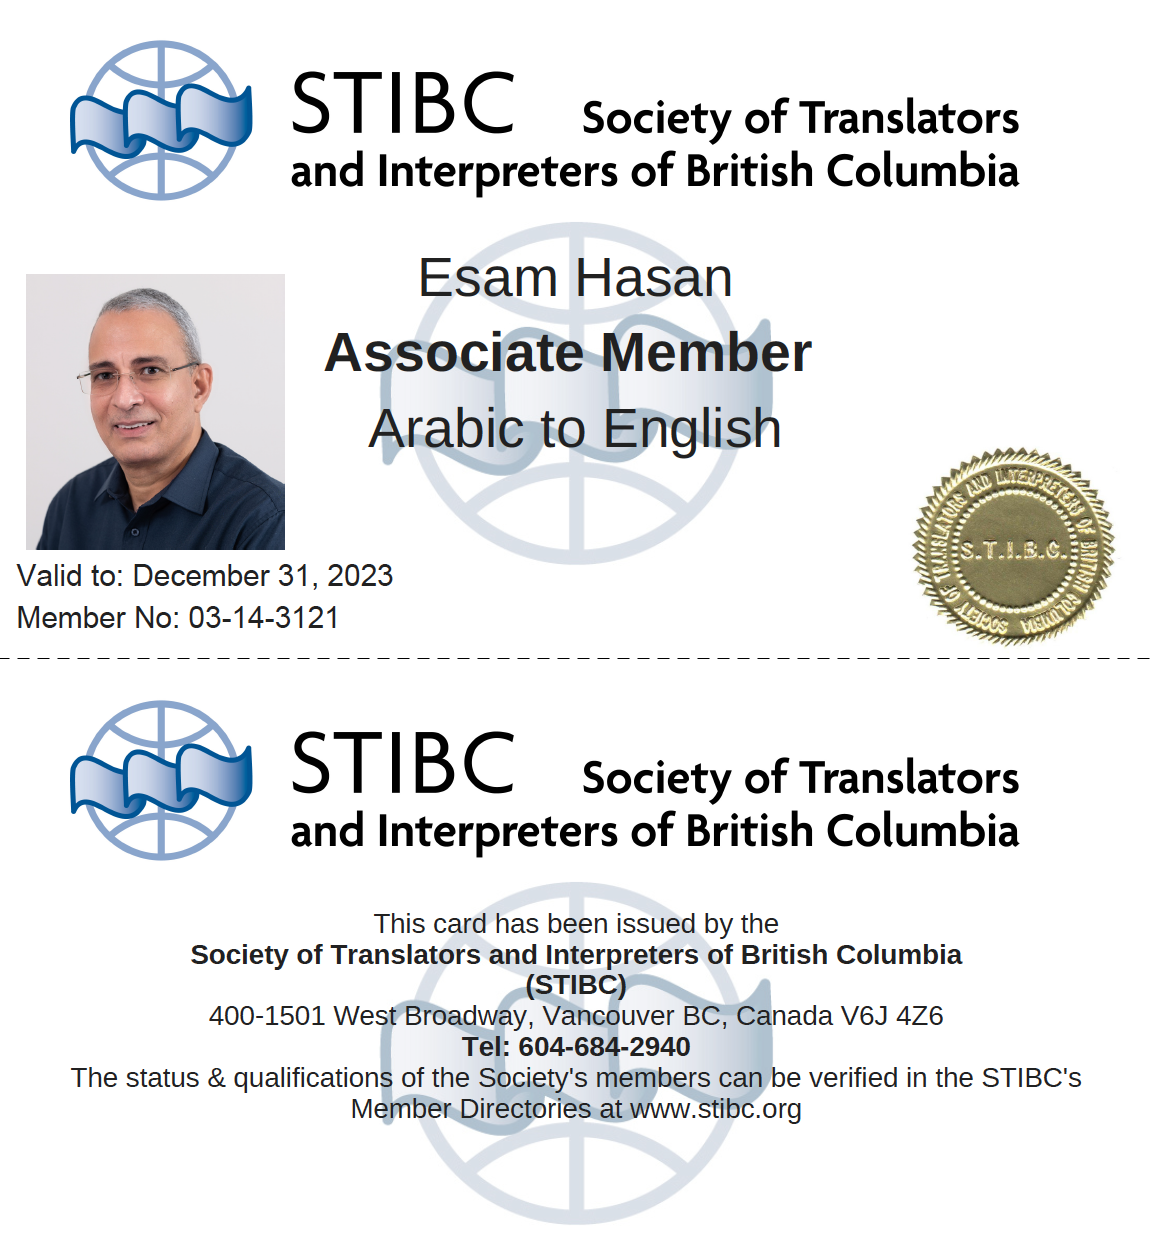 Esam Hasan's Member Card of Society of Translators and Interpreters of British Columbia
                      (STIBC)